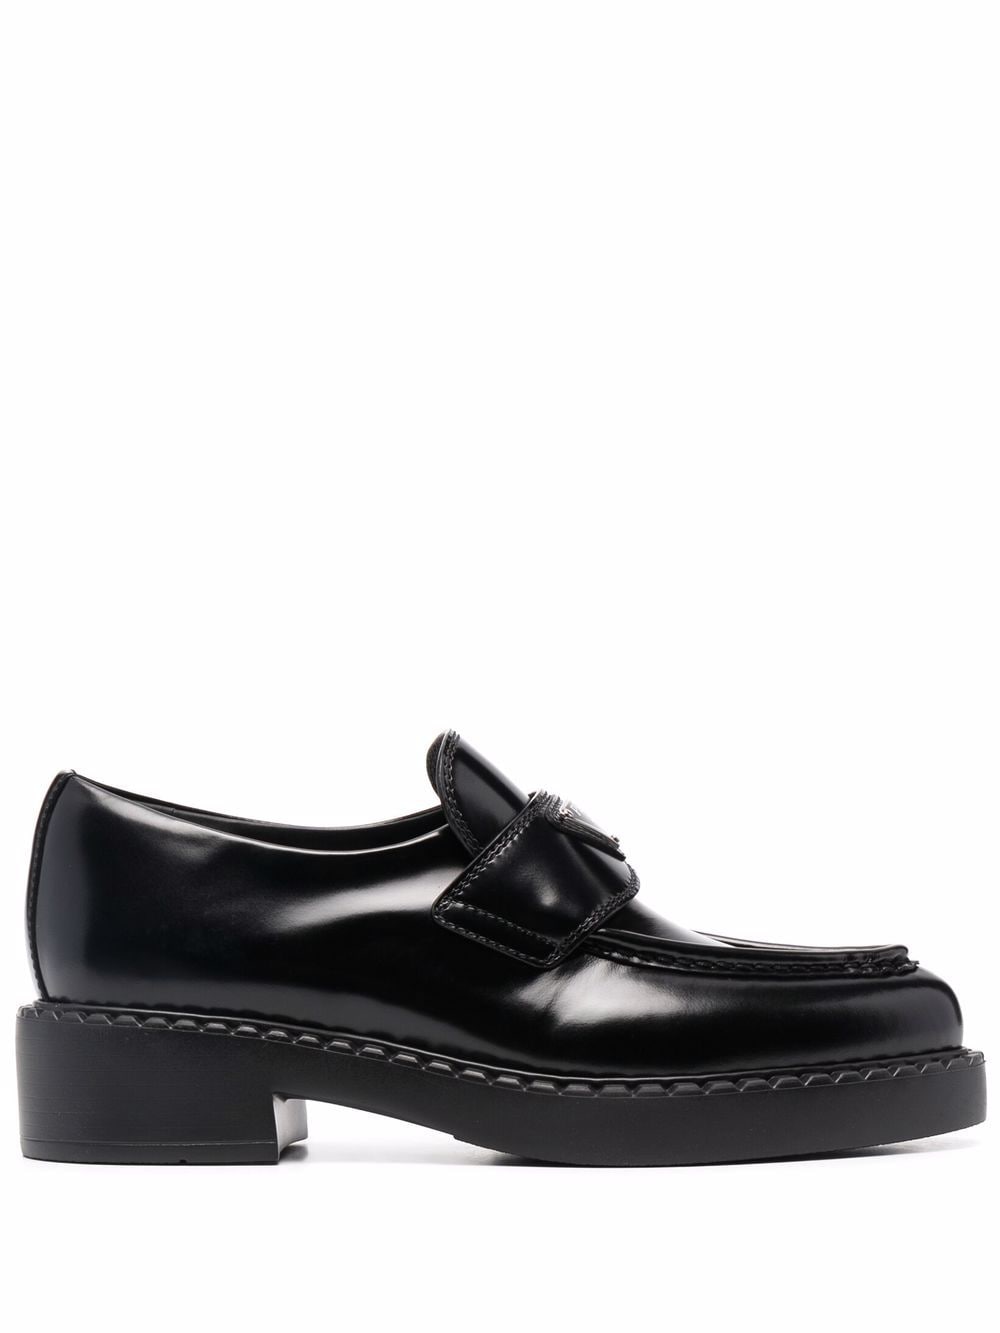 Leather Loafers дамски обувки Prada 843993309_36